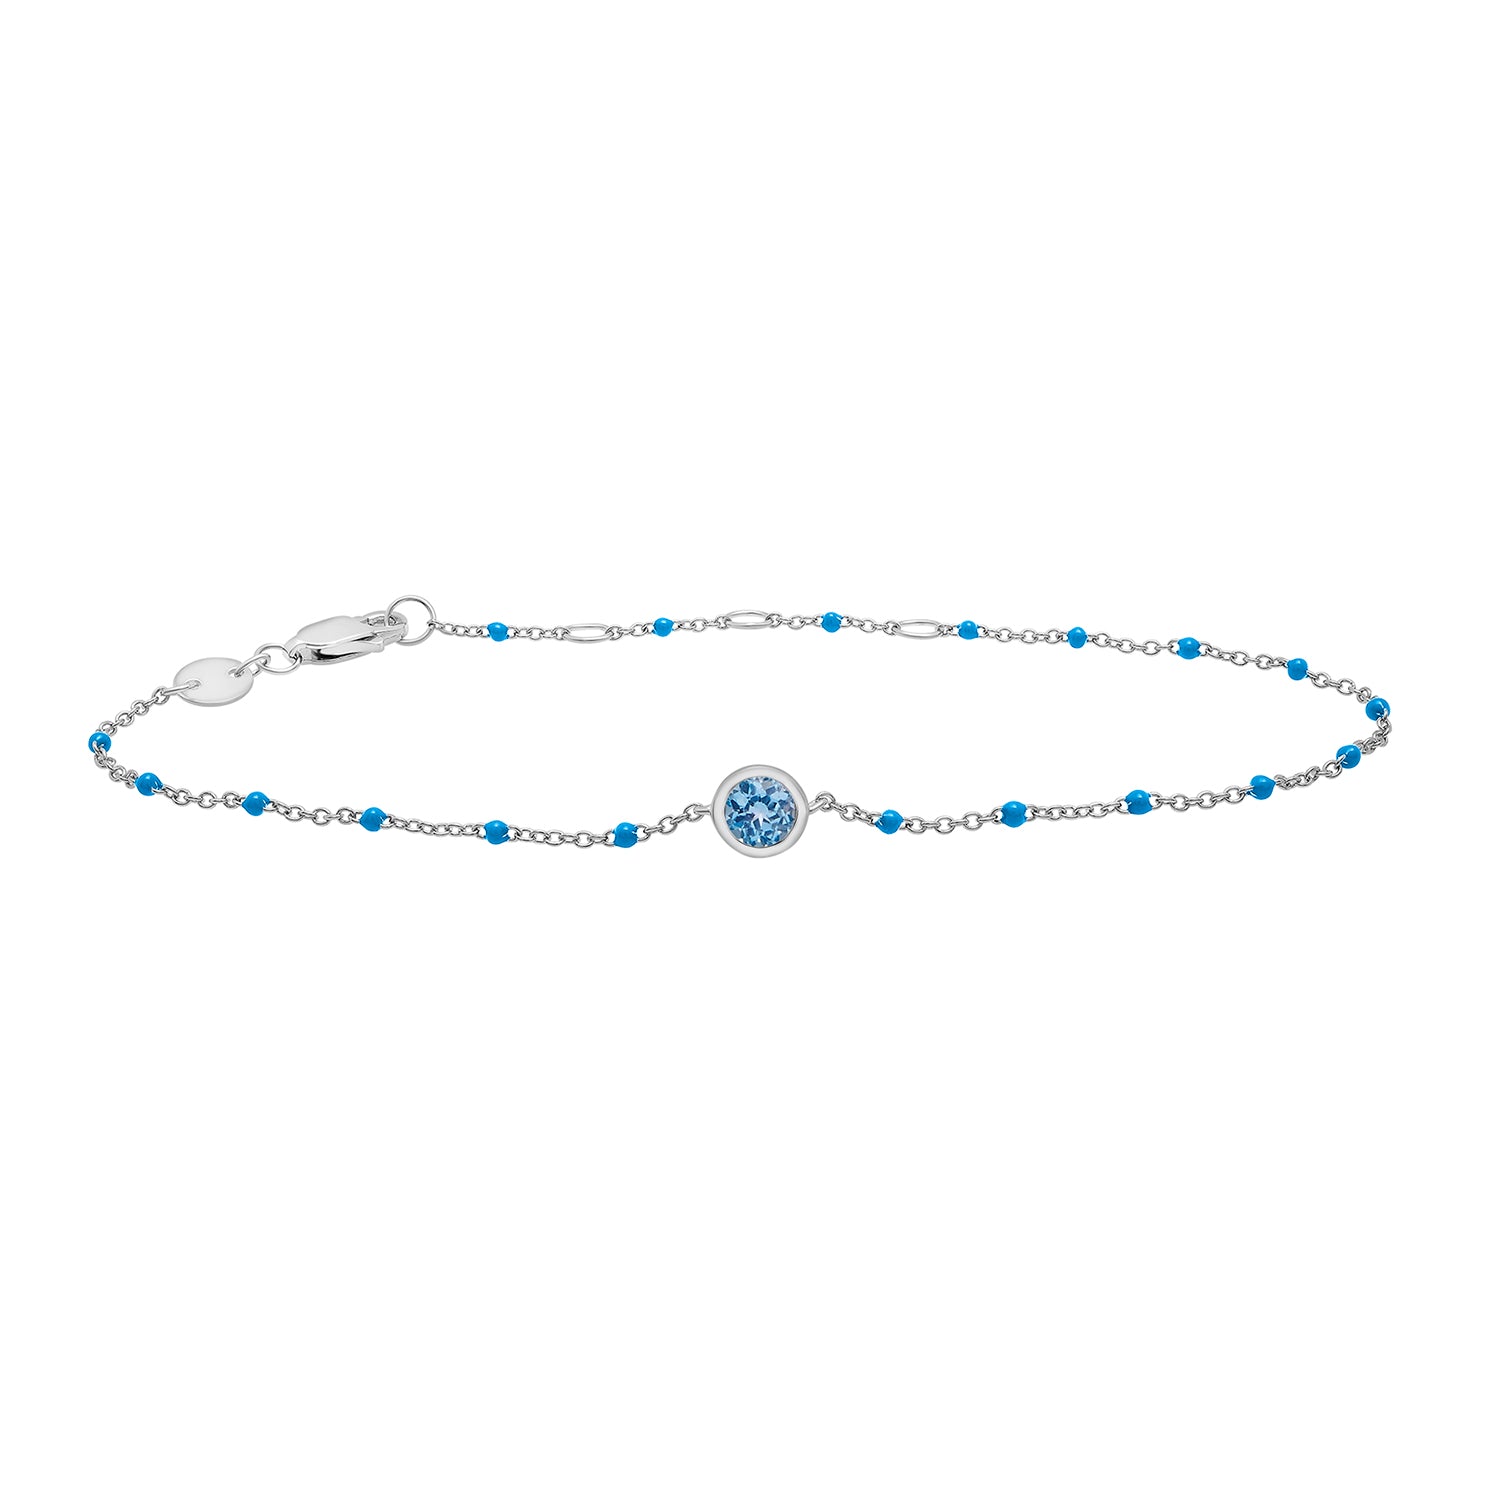 Birthstone Enamel Bracelet in Sky Blue Color